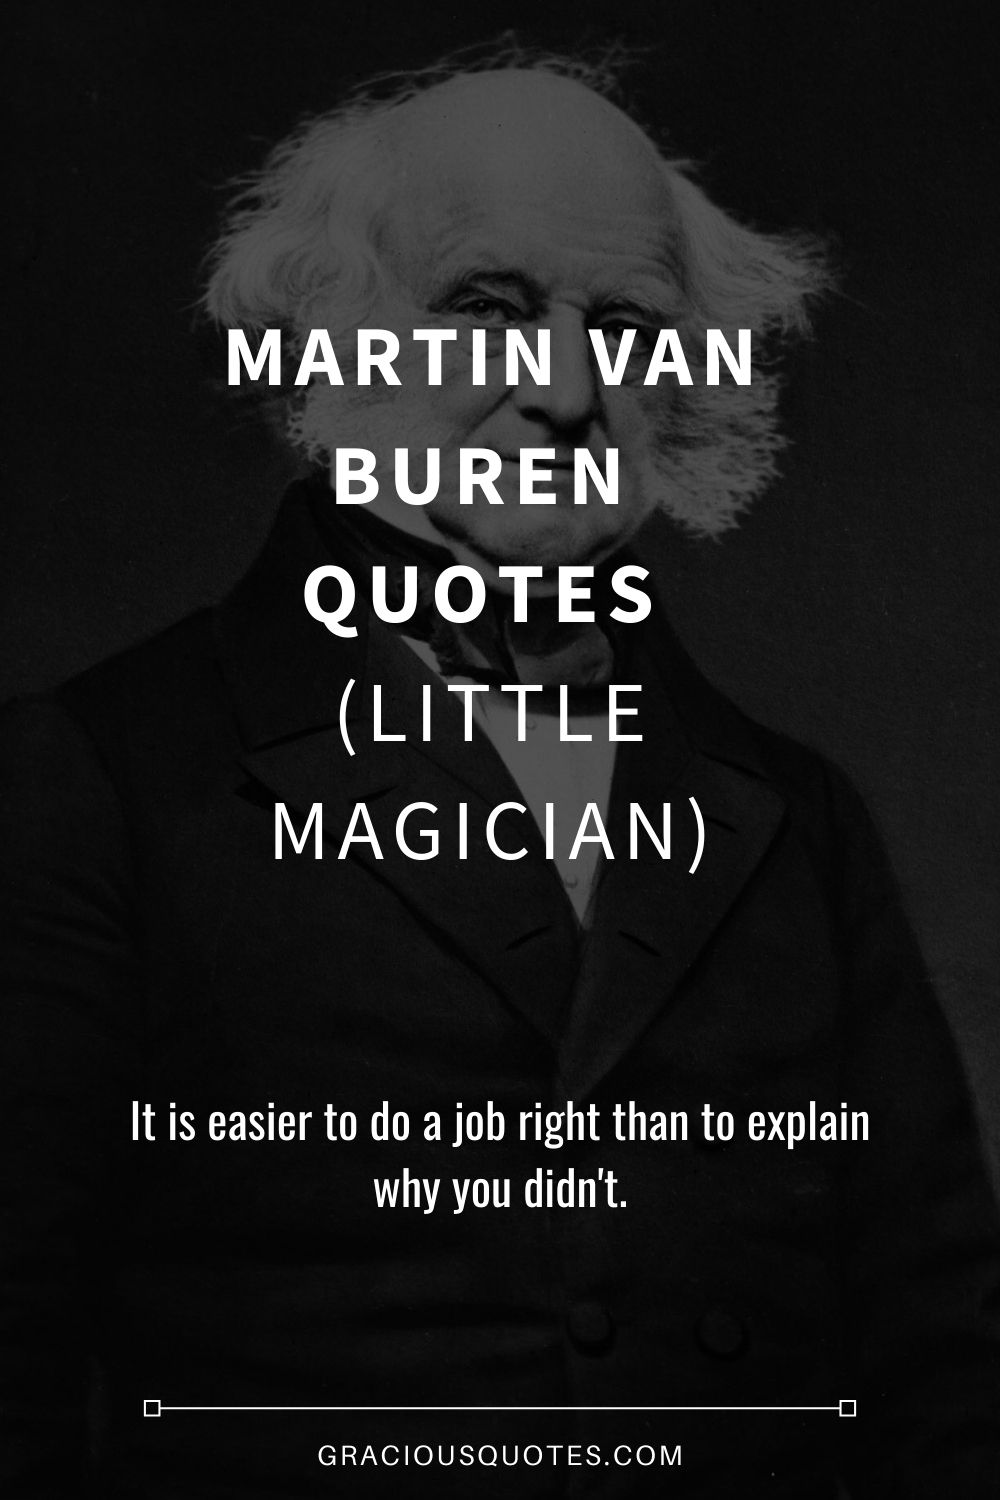 Martin Van Buren Quotes (LITTLE MAGICIAN) - Gracious Quotes